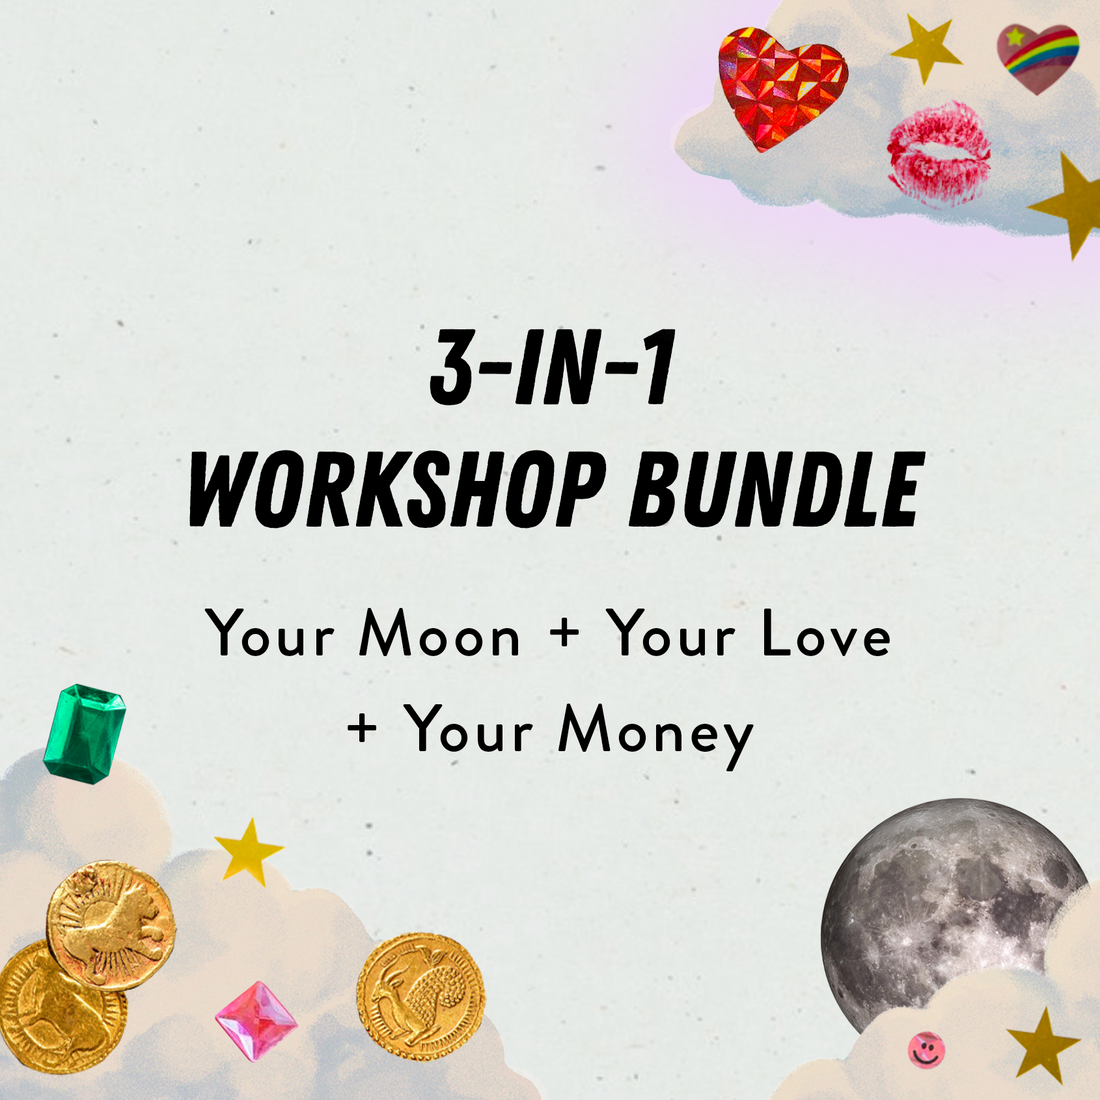 3-in-1 Workshop Bundle: Your Moon + Your Love + Your Money